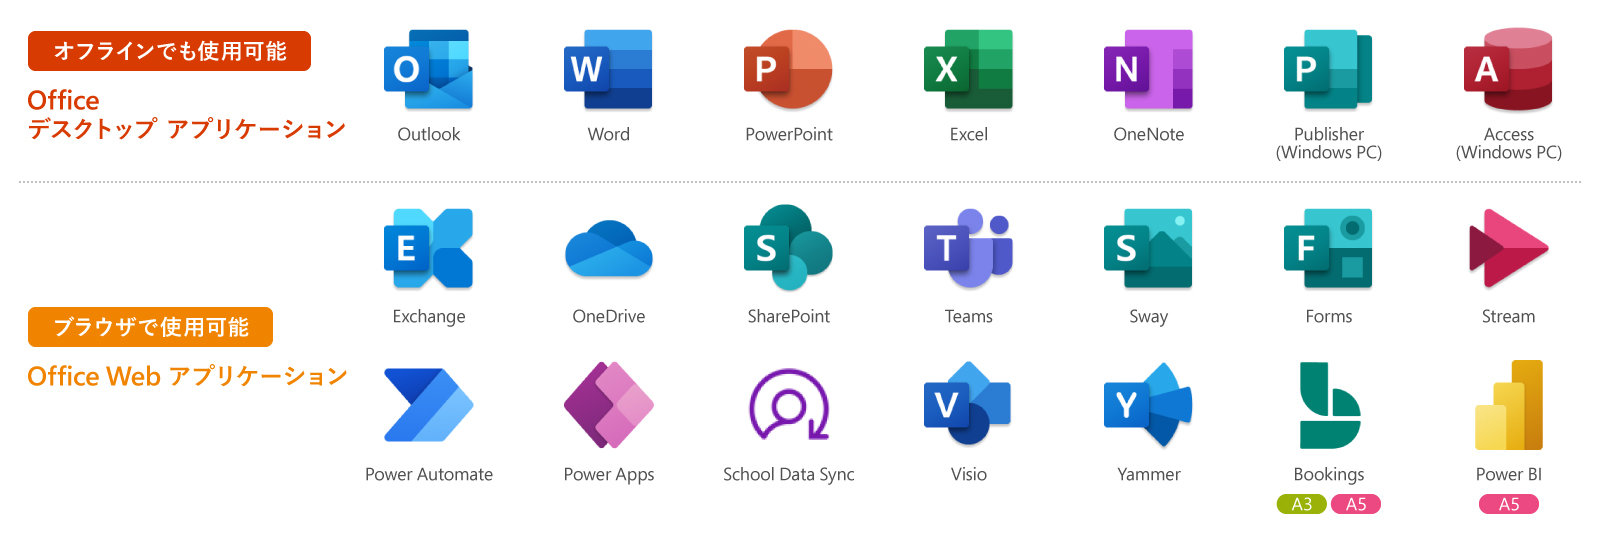 Office 365 Education でオフラインでも使用可能なアプリ、ブラウザで使用可能なアプリの一覧の説明図